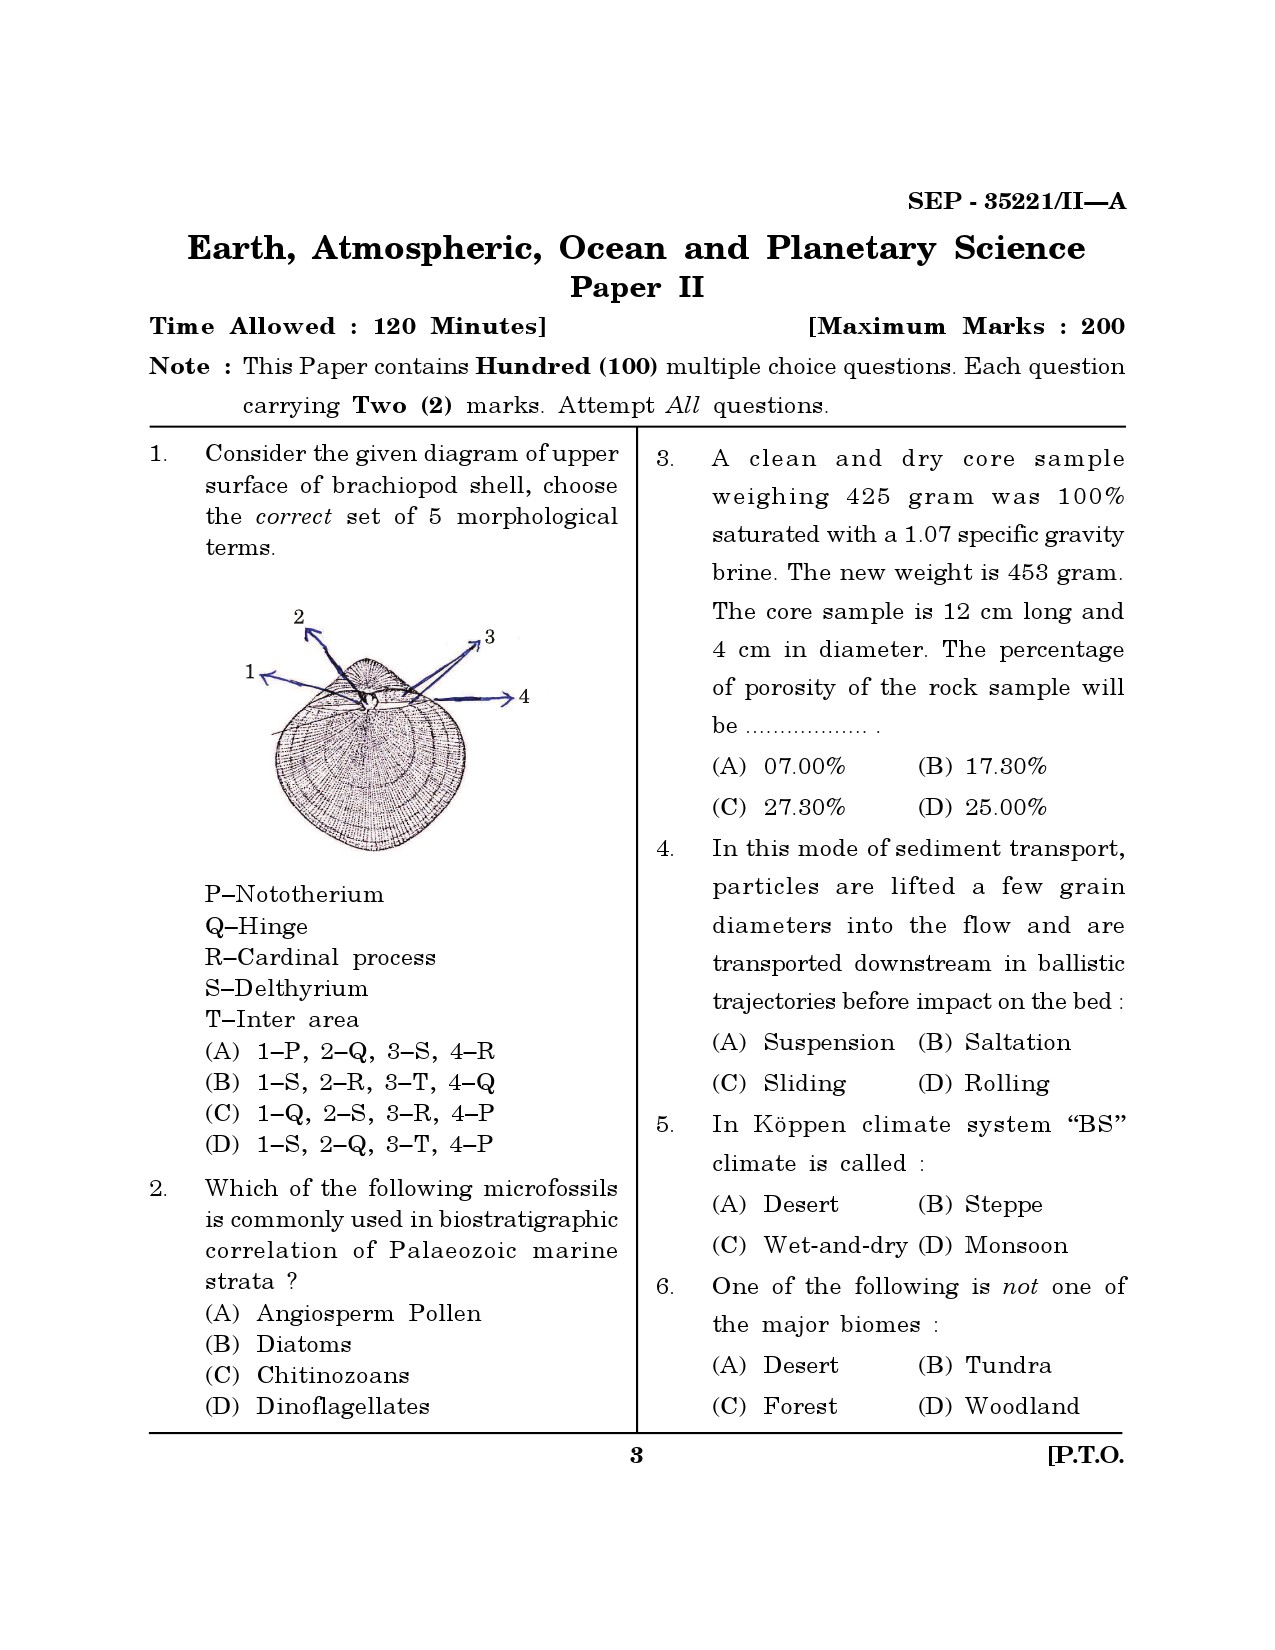 Maharashtra SET Earth Atmospheric Ocean Planetary Science Exam Question Paper September 2021 2